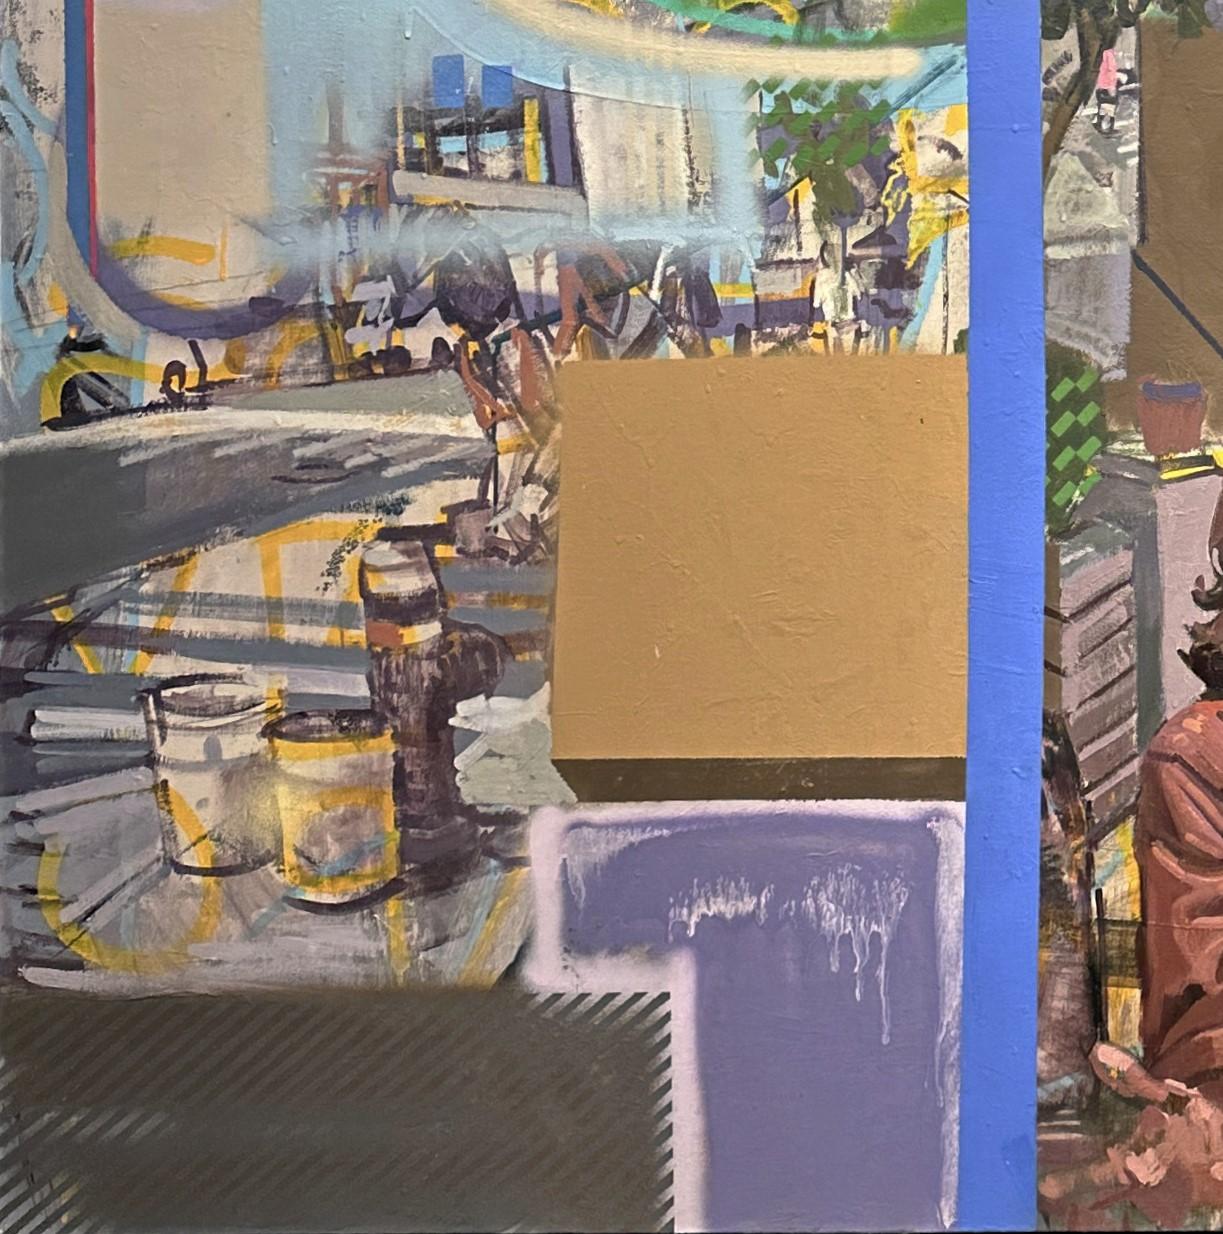 Ben Duke
Untitled
oil on canvas
55h x 63w in
139.70h x 160.02w cm
BSD033

Ben Duke
b. 1977  Louisville, KY

Education

2006	M.F.A., Maryland Institute College of Art, Baltimore, MD
2002	B.F.A., University of Utah, Salt Lake City, UT
2001	Summer